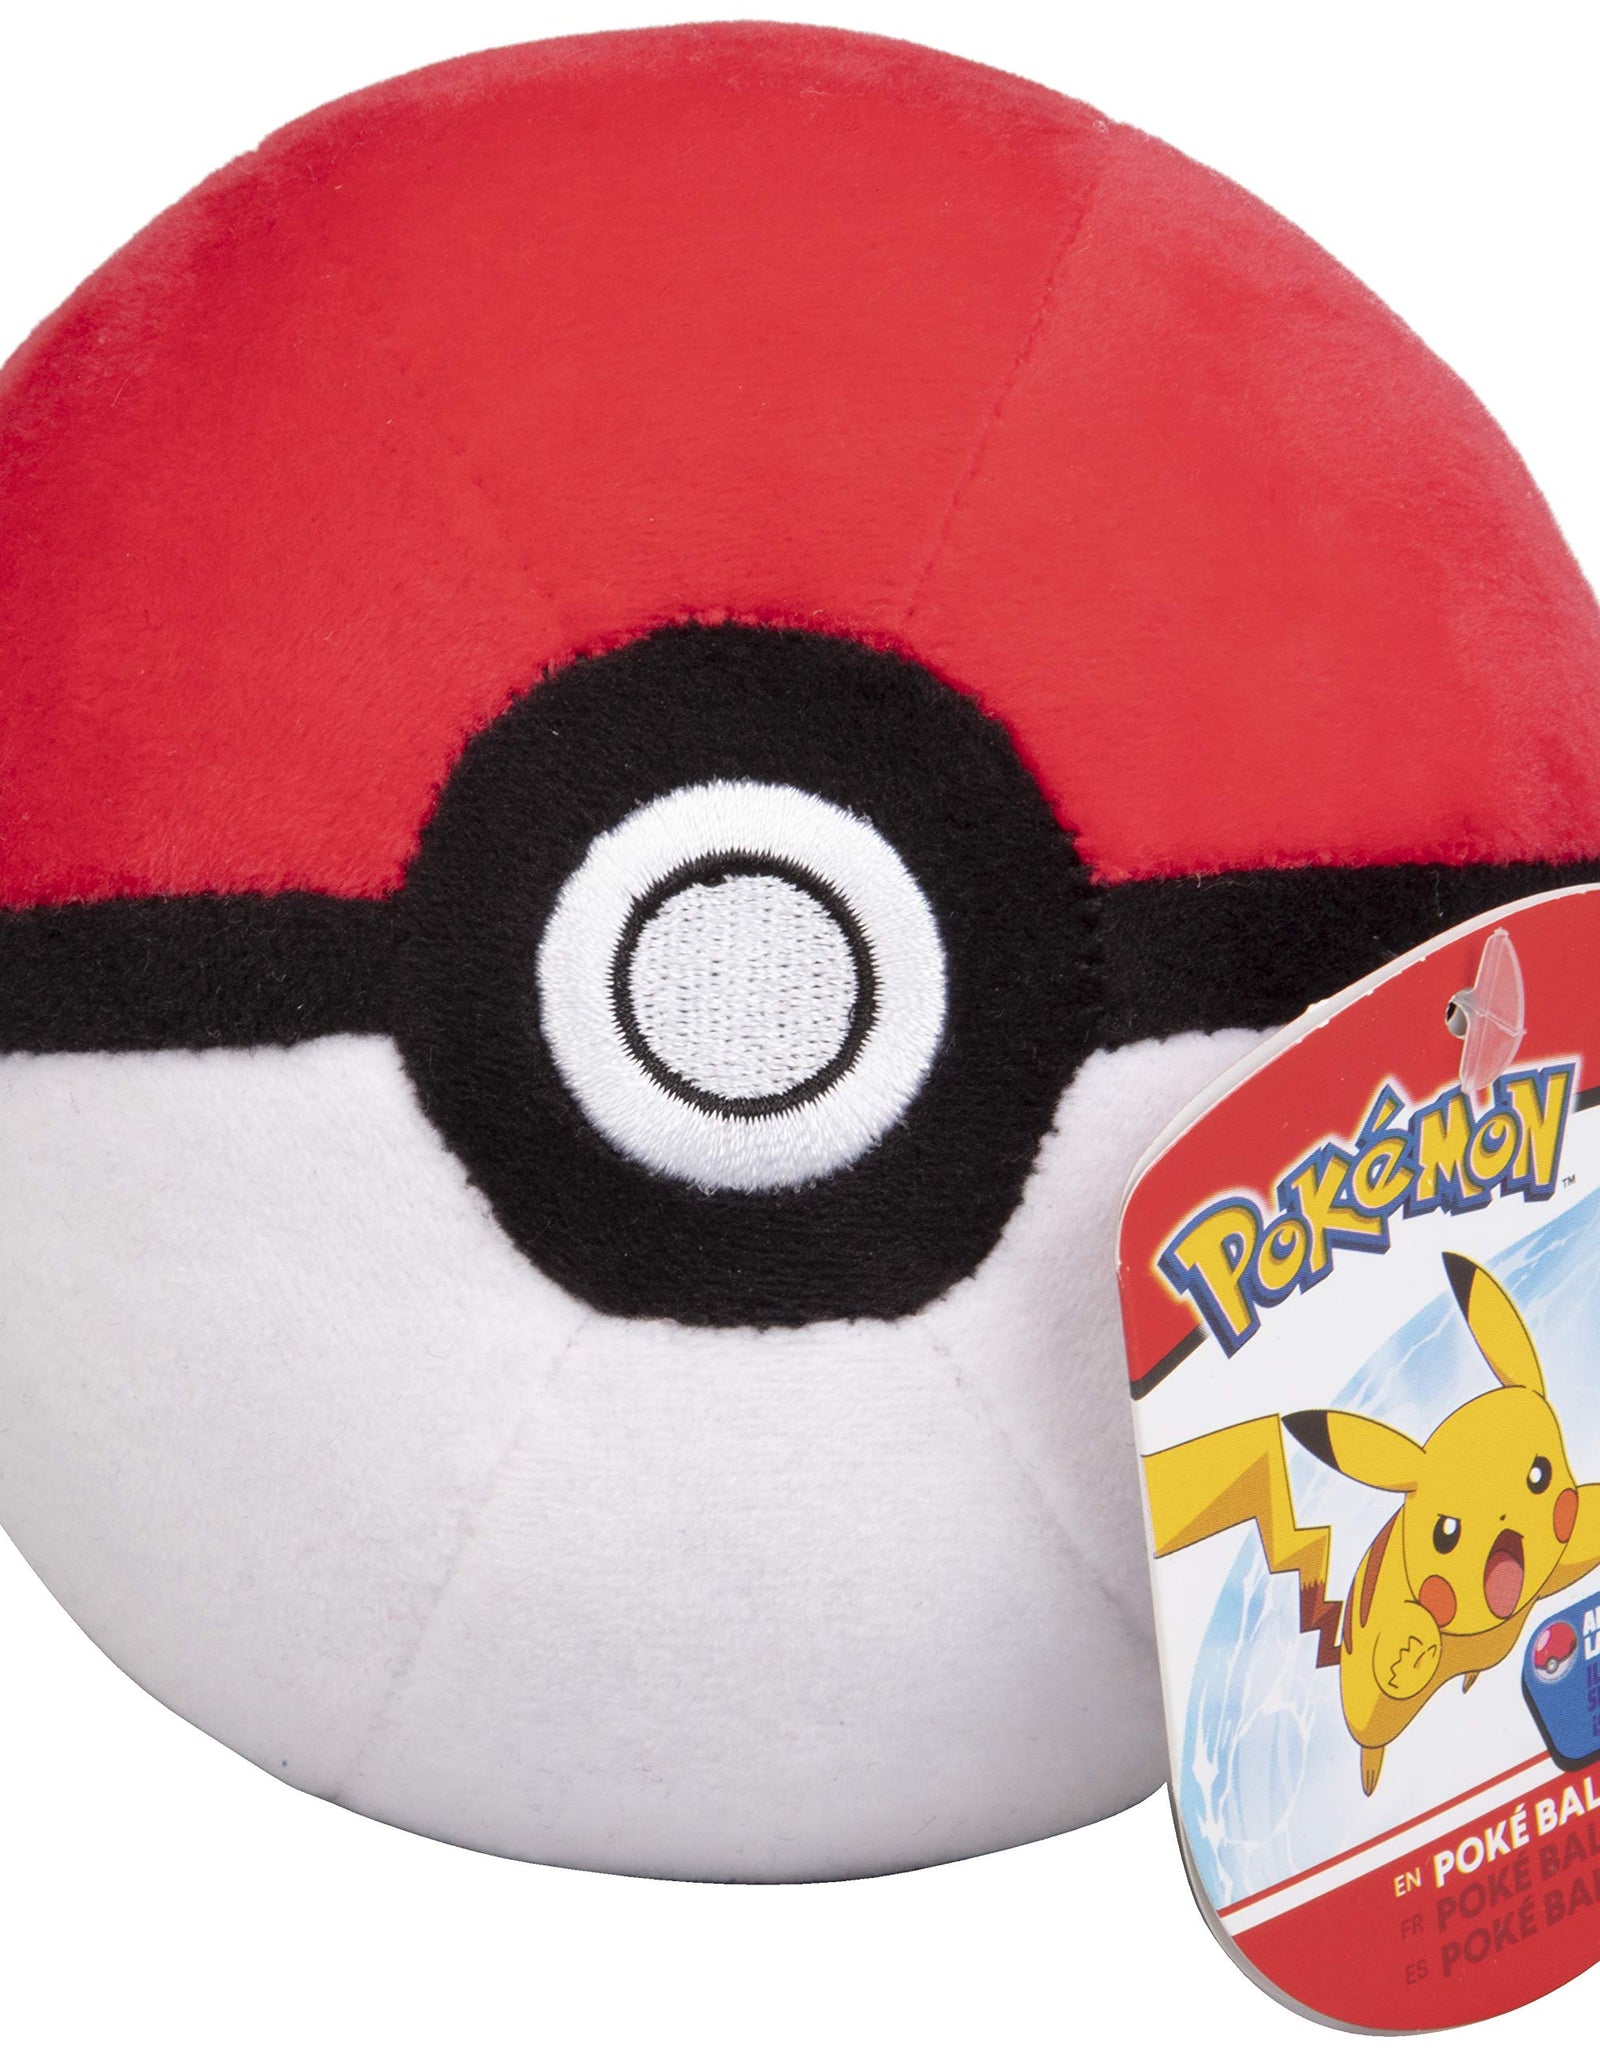 Pokémon 4" Pokéball Plush - Soft Stuffed Poké Ball with Weighted Bottom